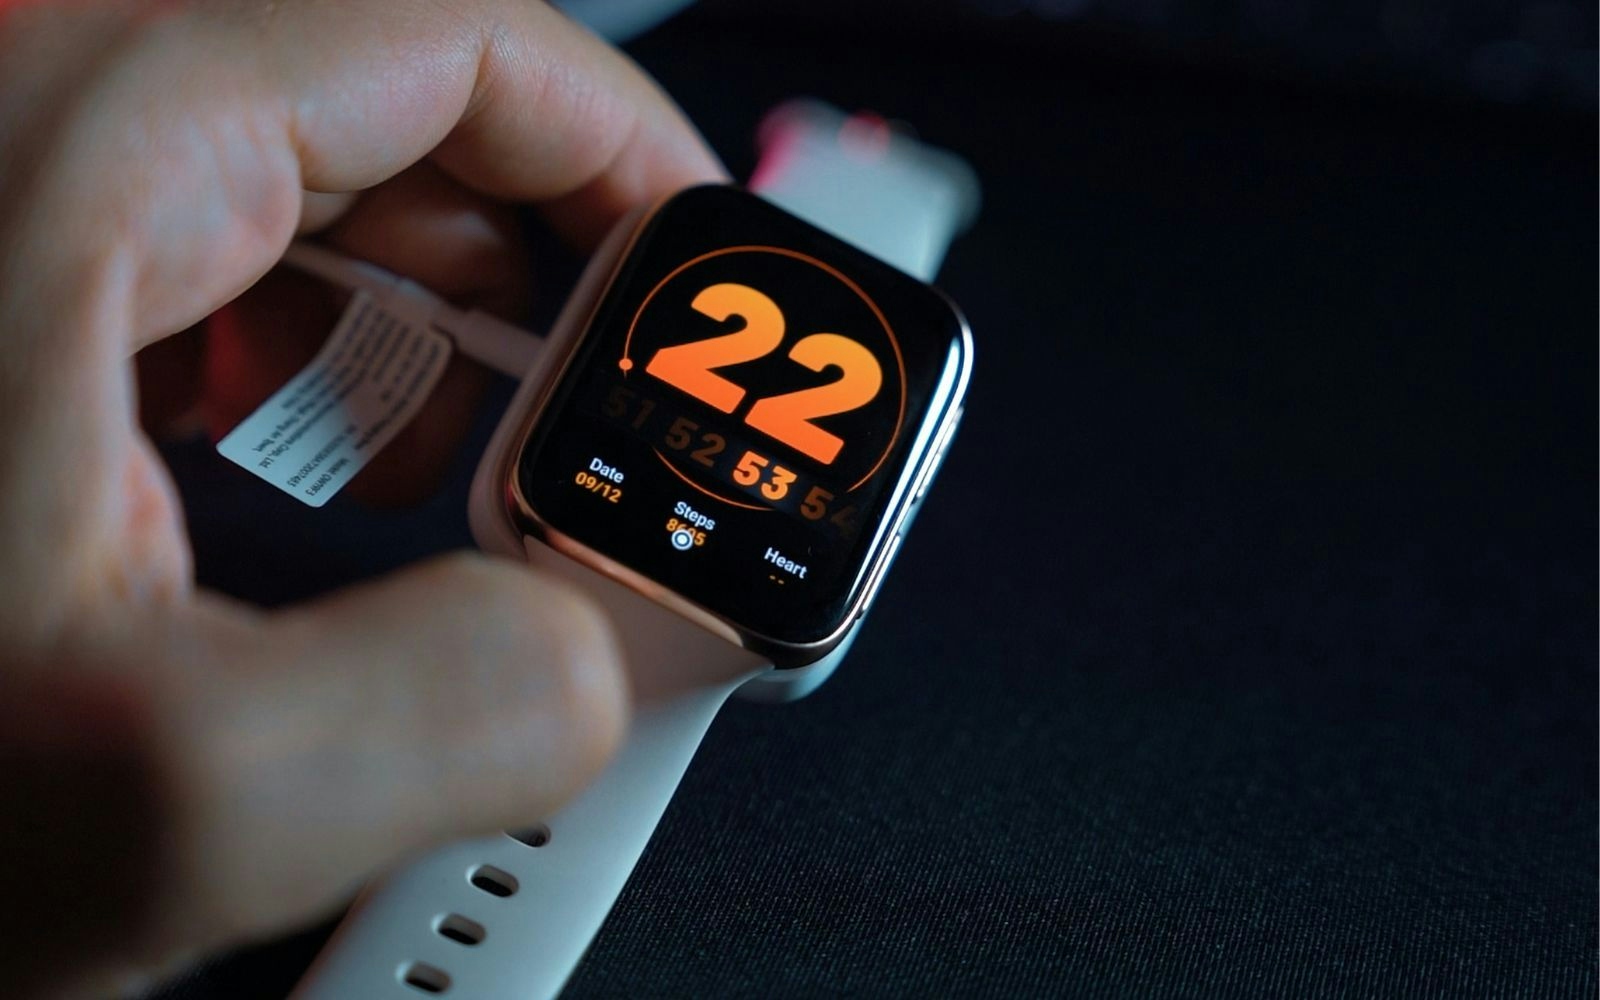 apple watch displaying fitness metrics